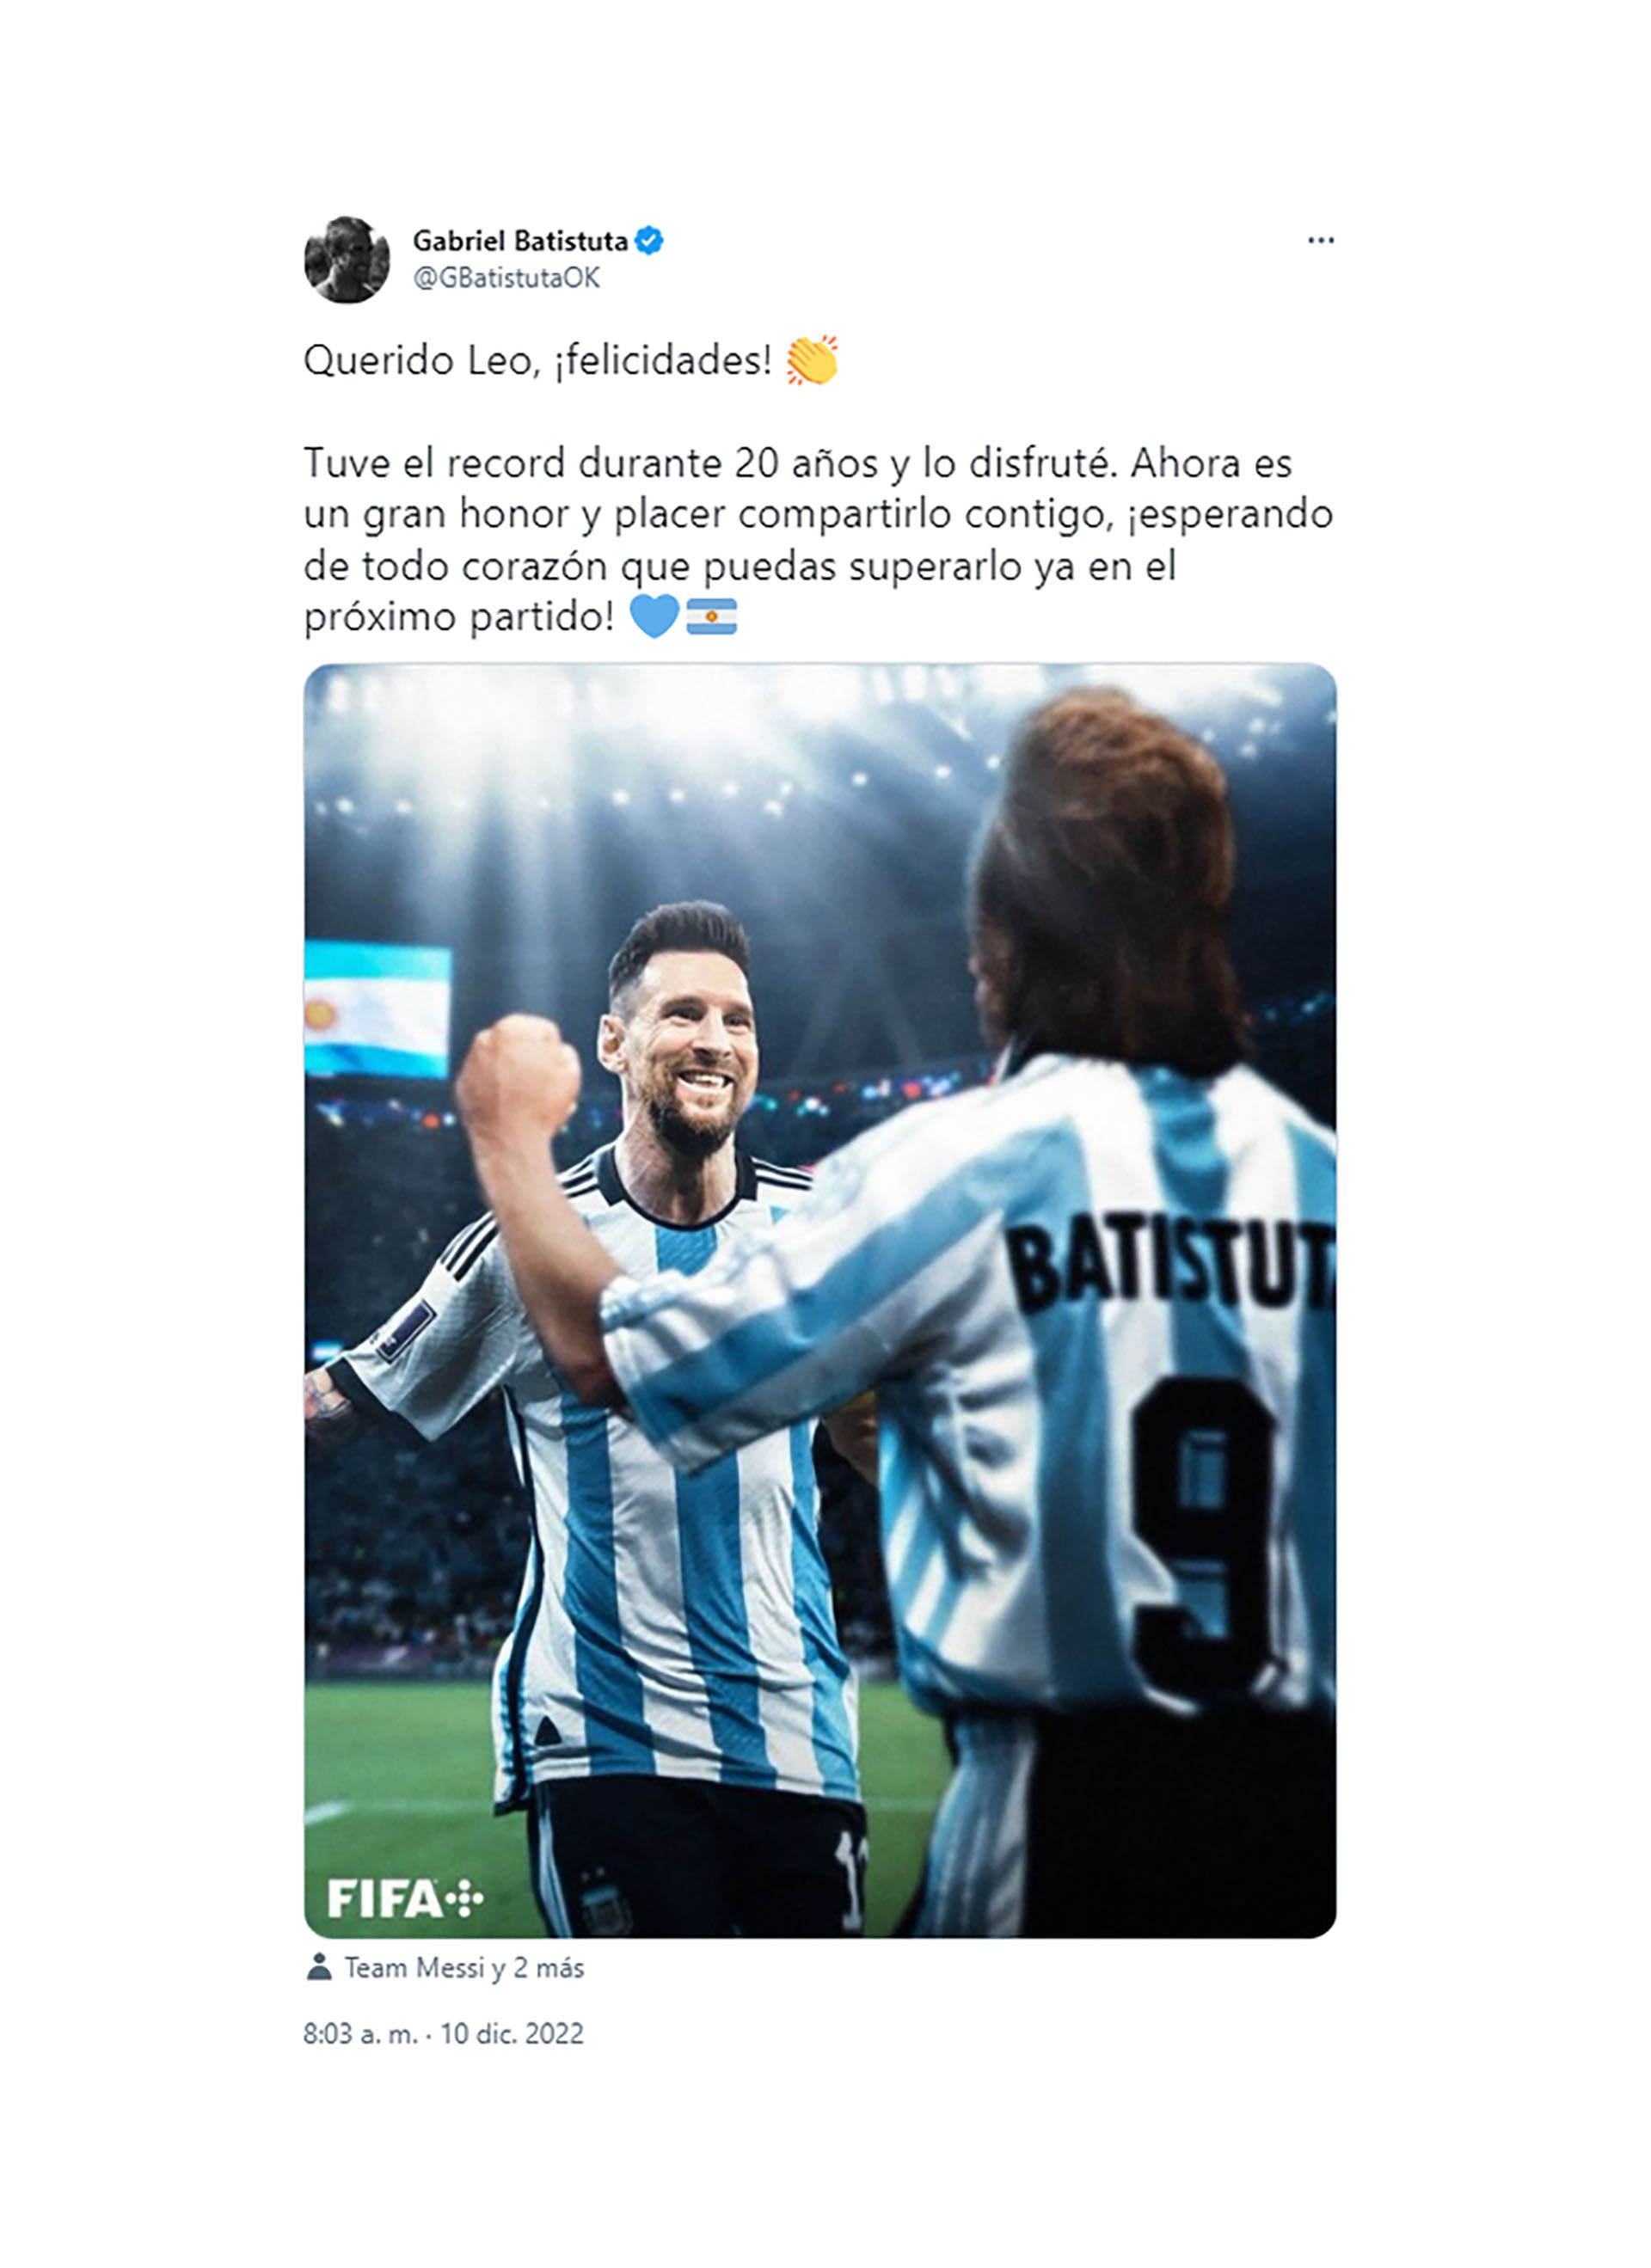 El mensaje de Gabriel Batistuta para Lionel Messi. 